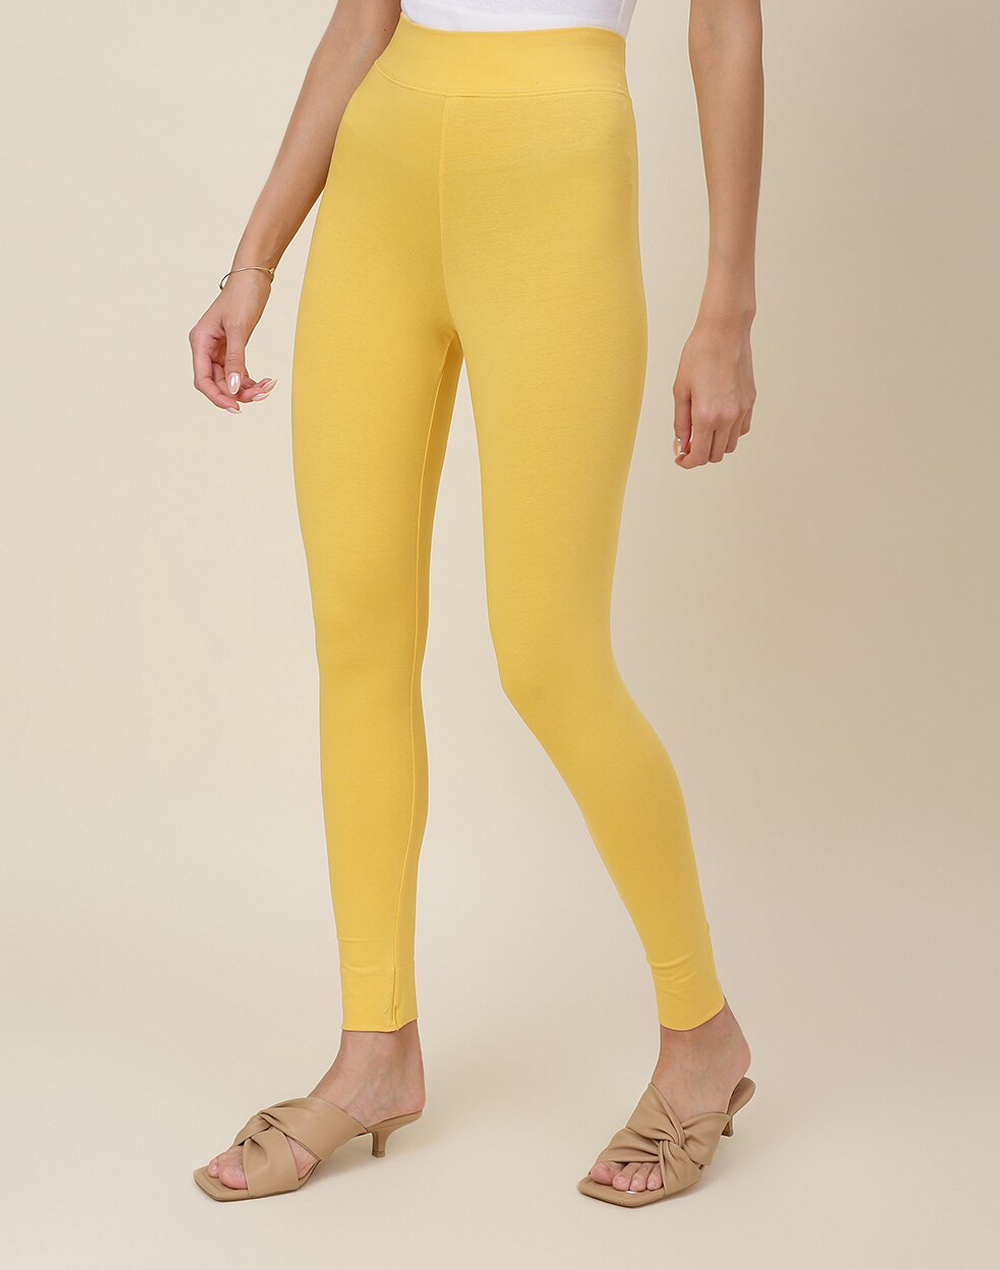 Stylish Leggings Solid Skin Fit Mustard Cotton Spandex Capri For Women &  Girls at Rs 379.00, Sarjapura, Bengaluru